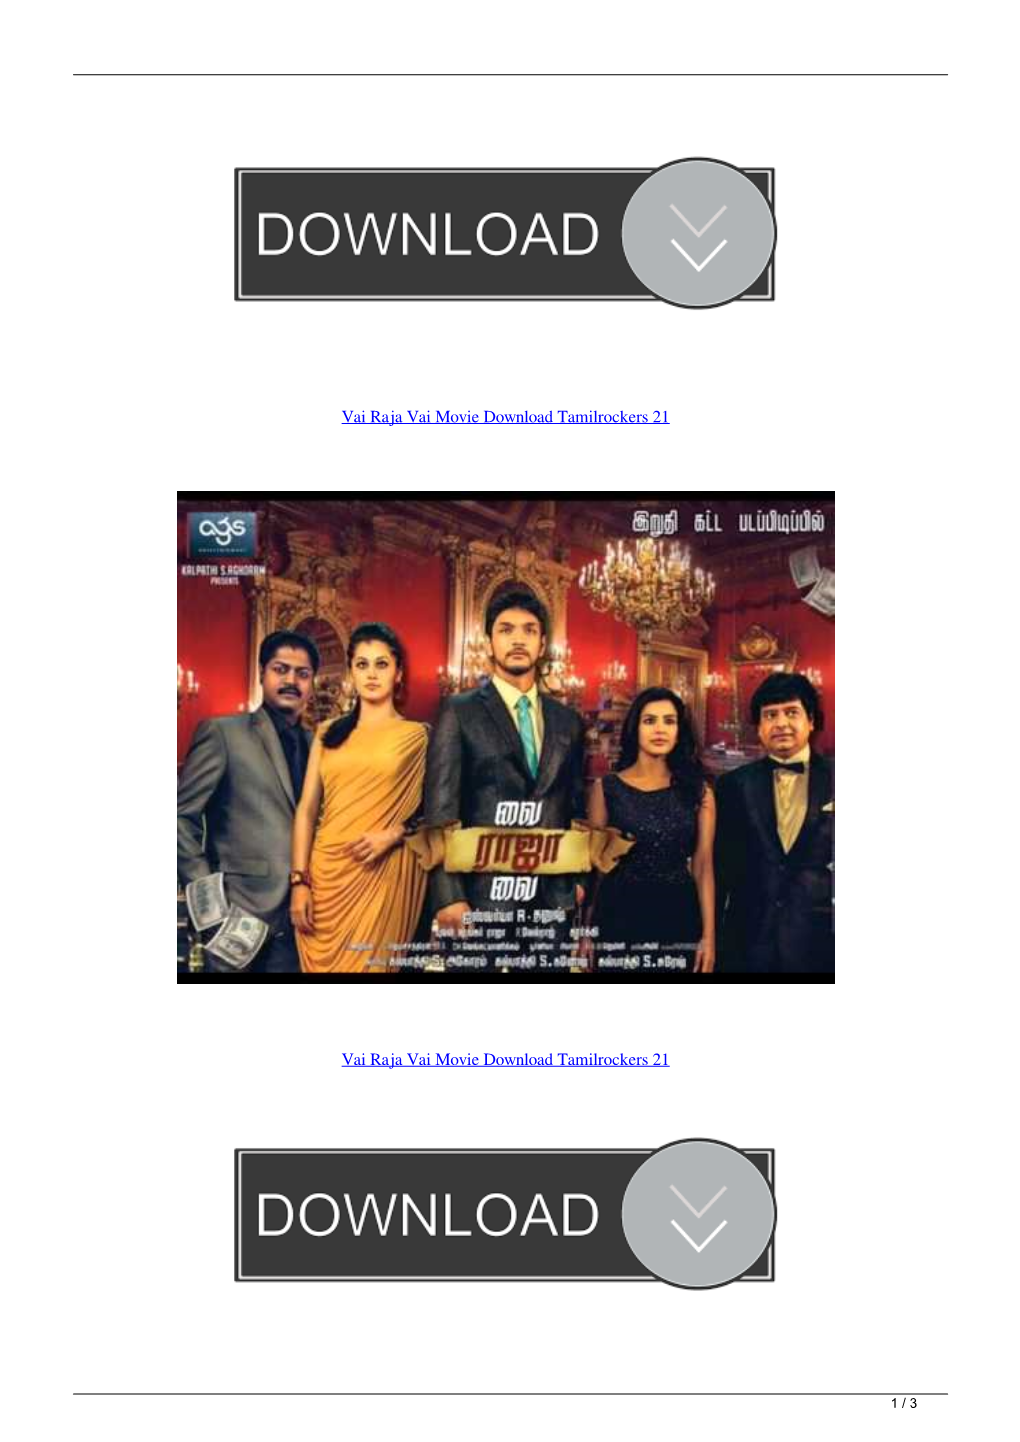 Vai Raja Vai Movie Download Tamilrockers 21